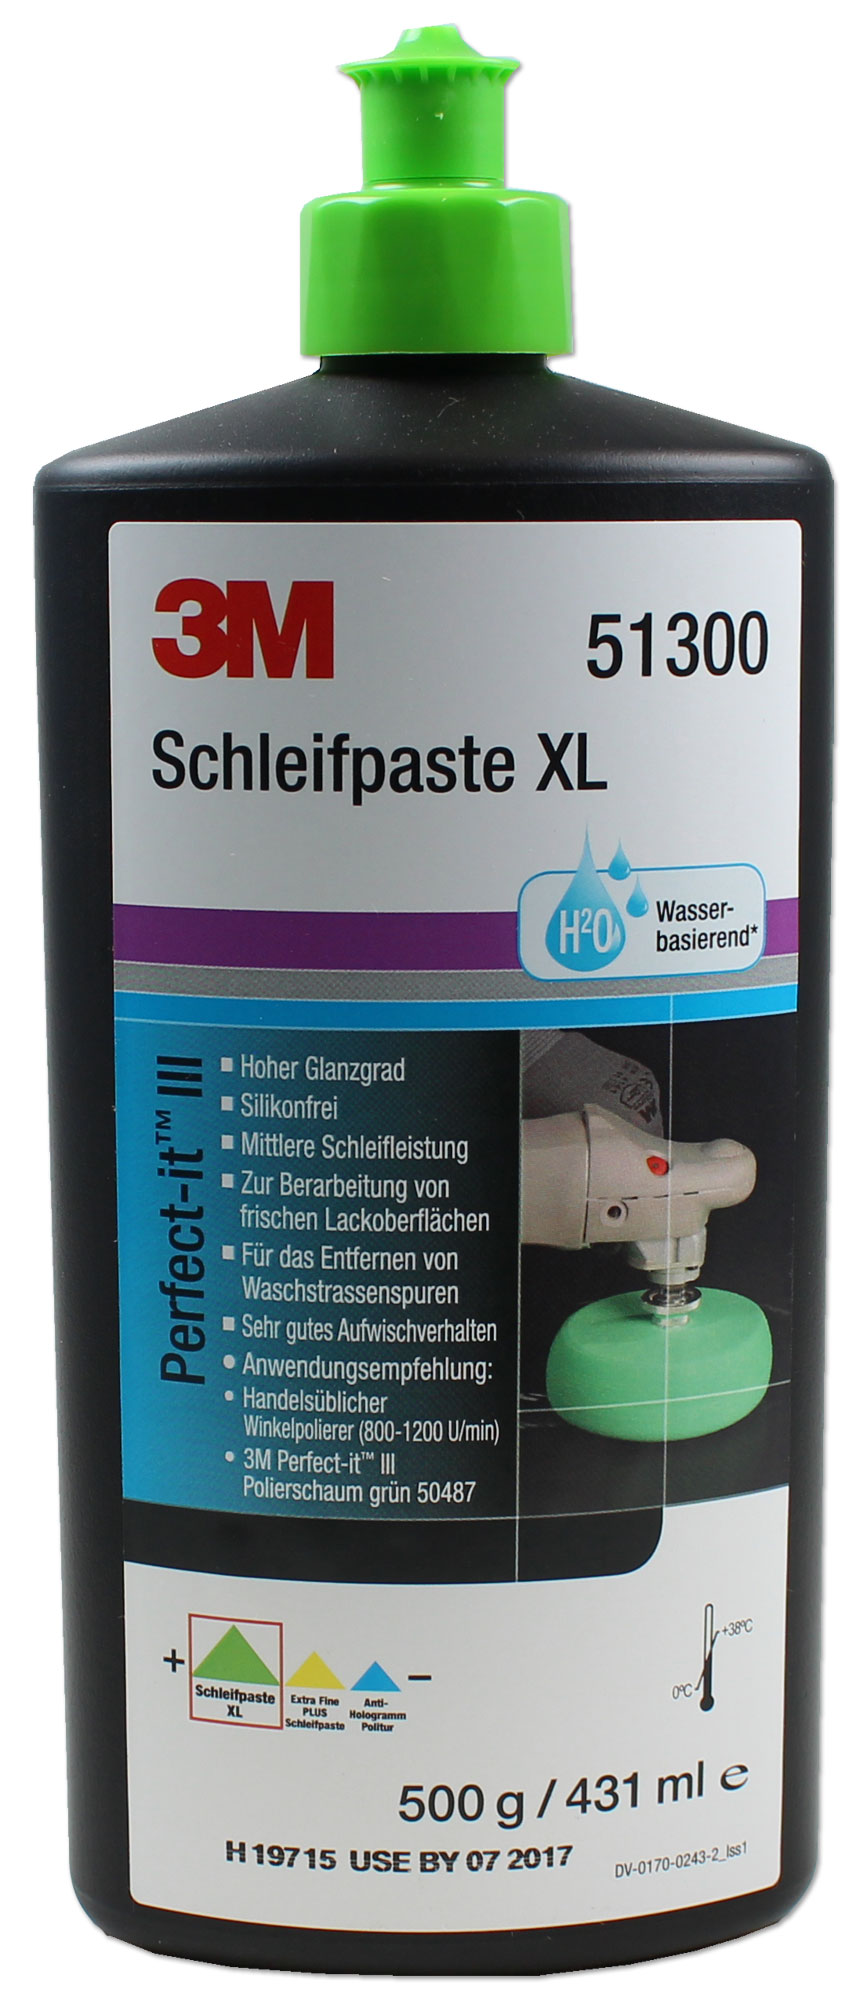 3M Perfect-it III Schleifpaste XL Fast Cut 500g 51300